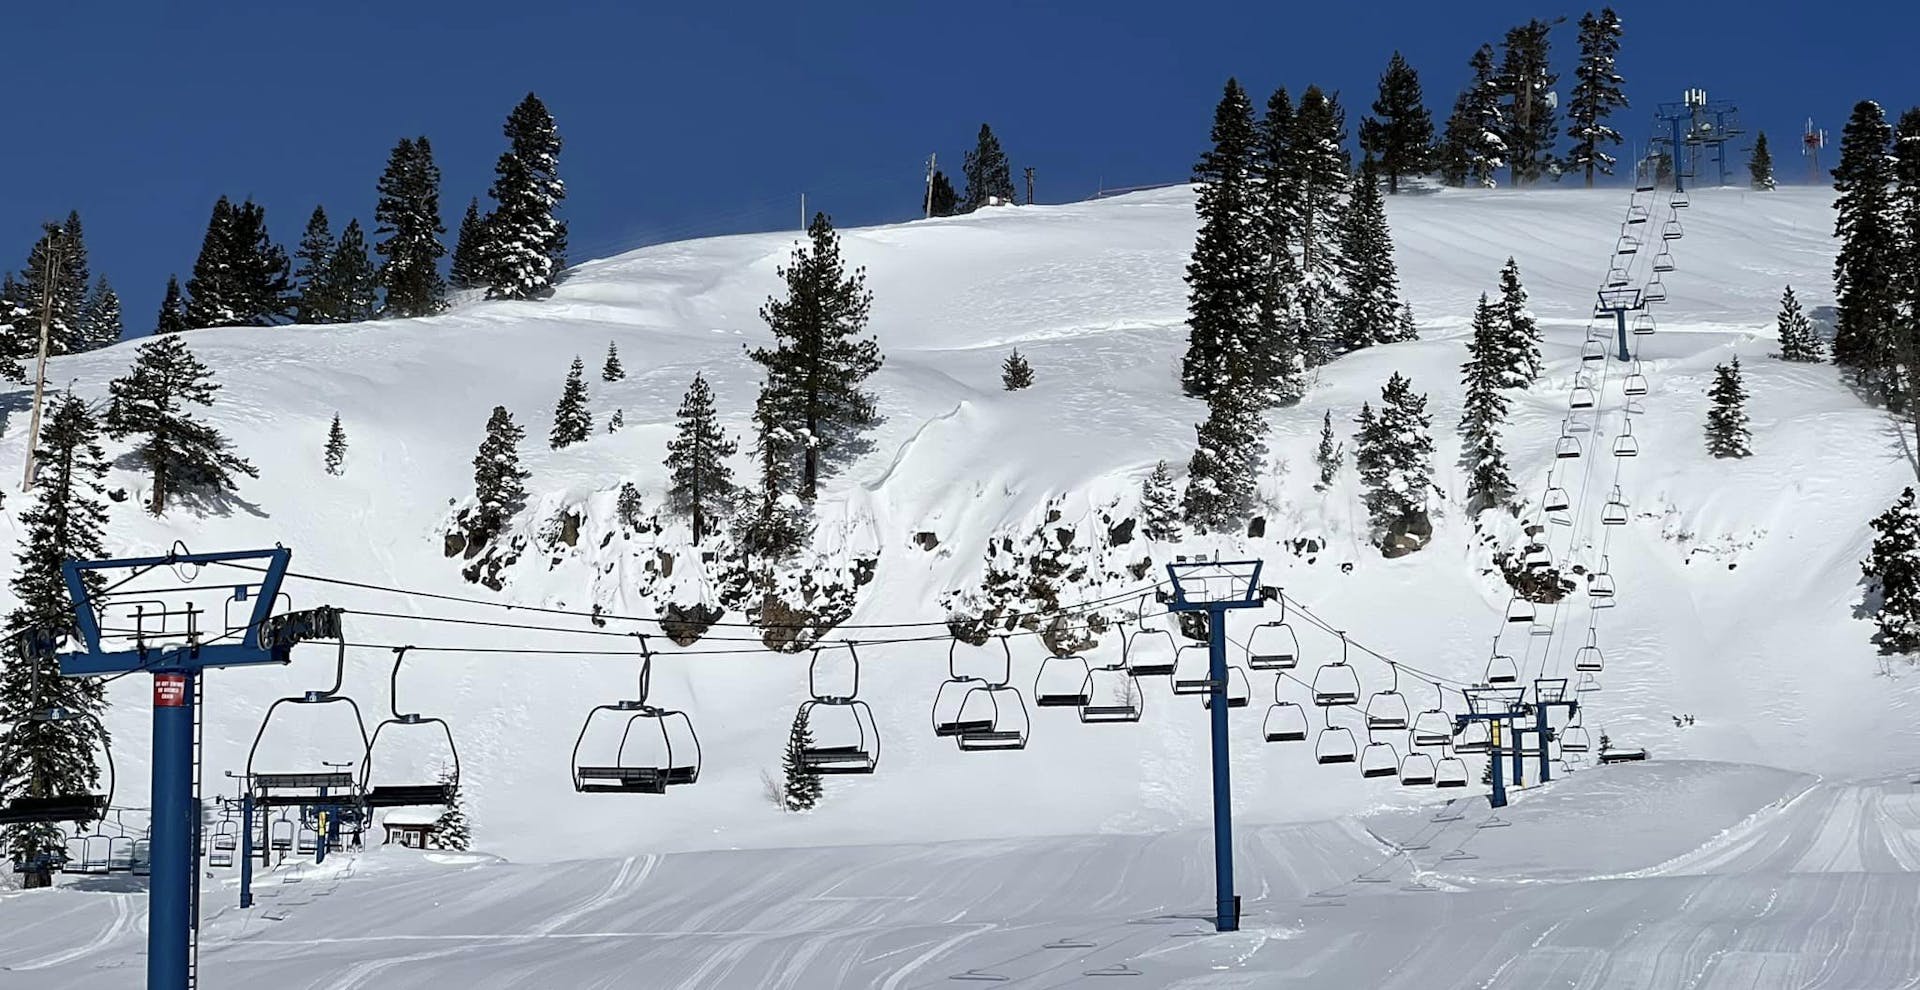 Donner Ski Ranch slopes and chairlift